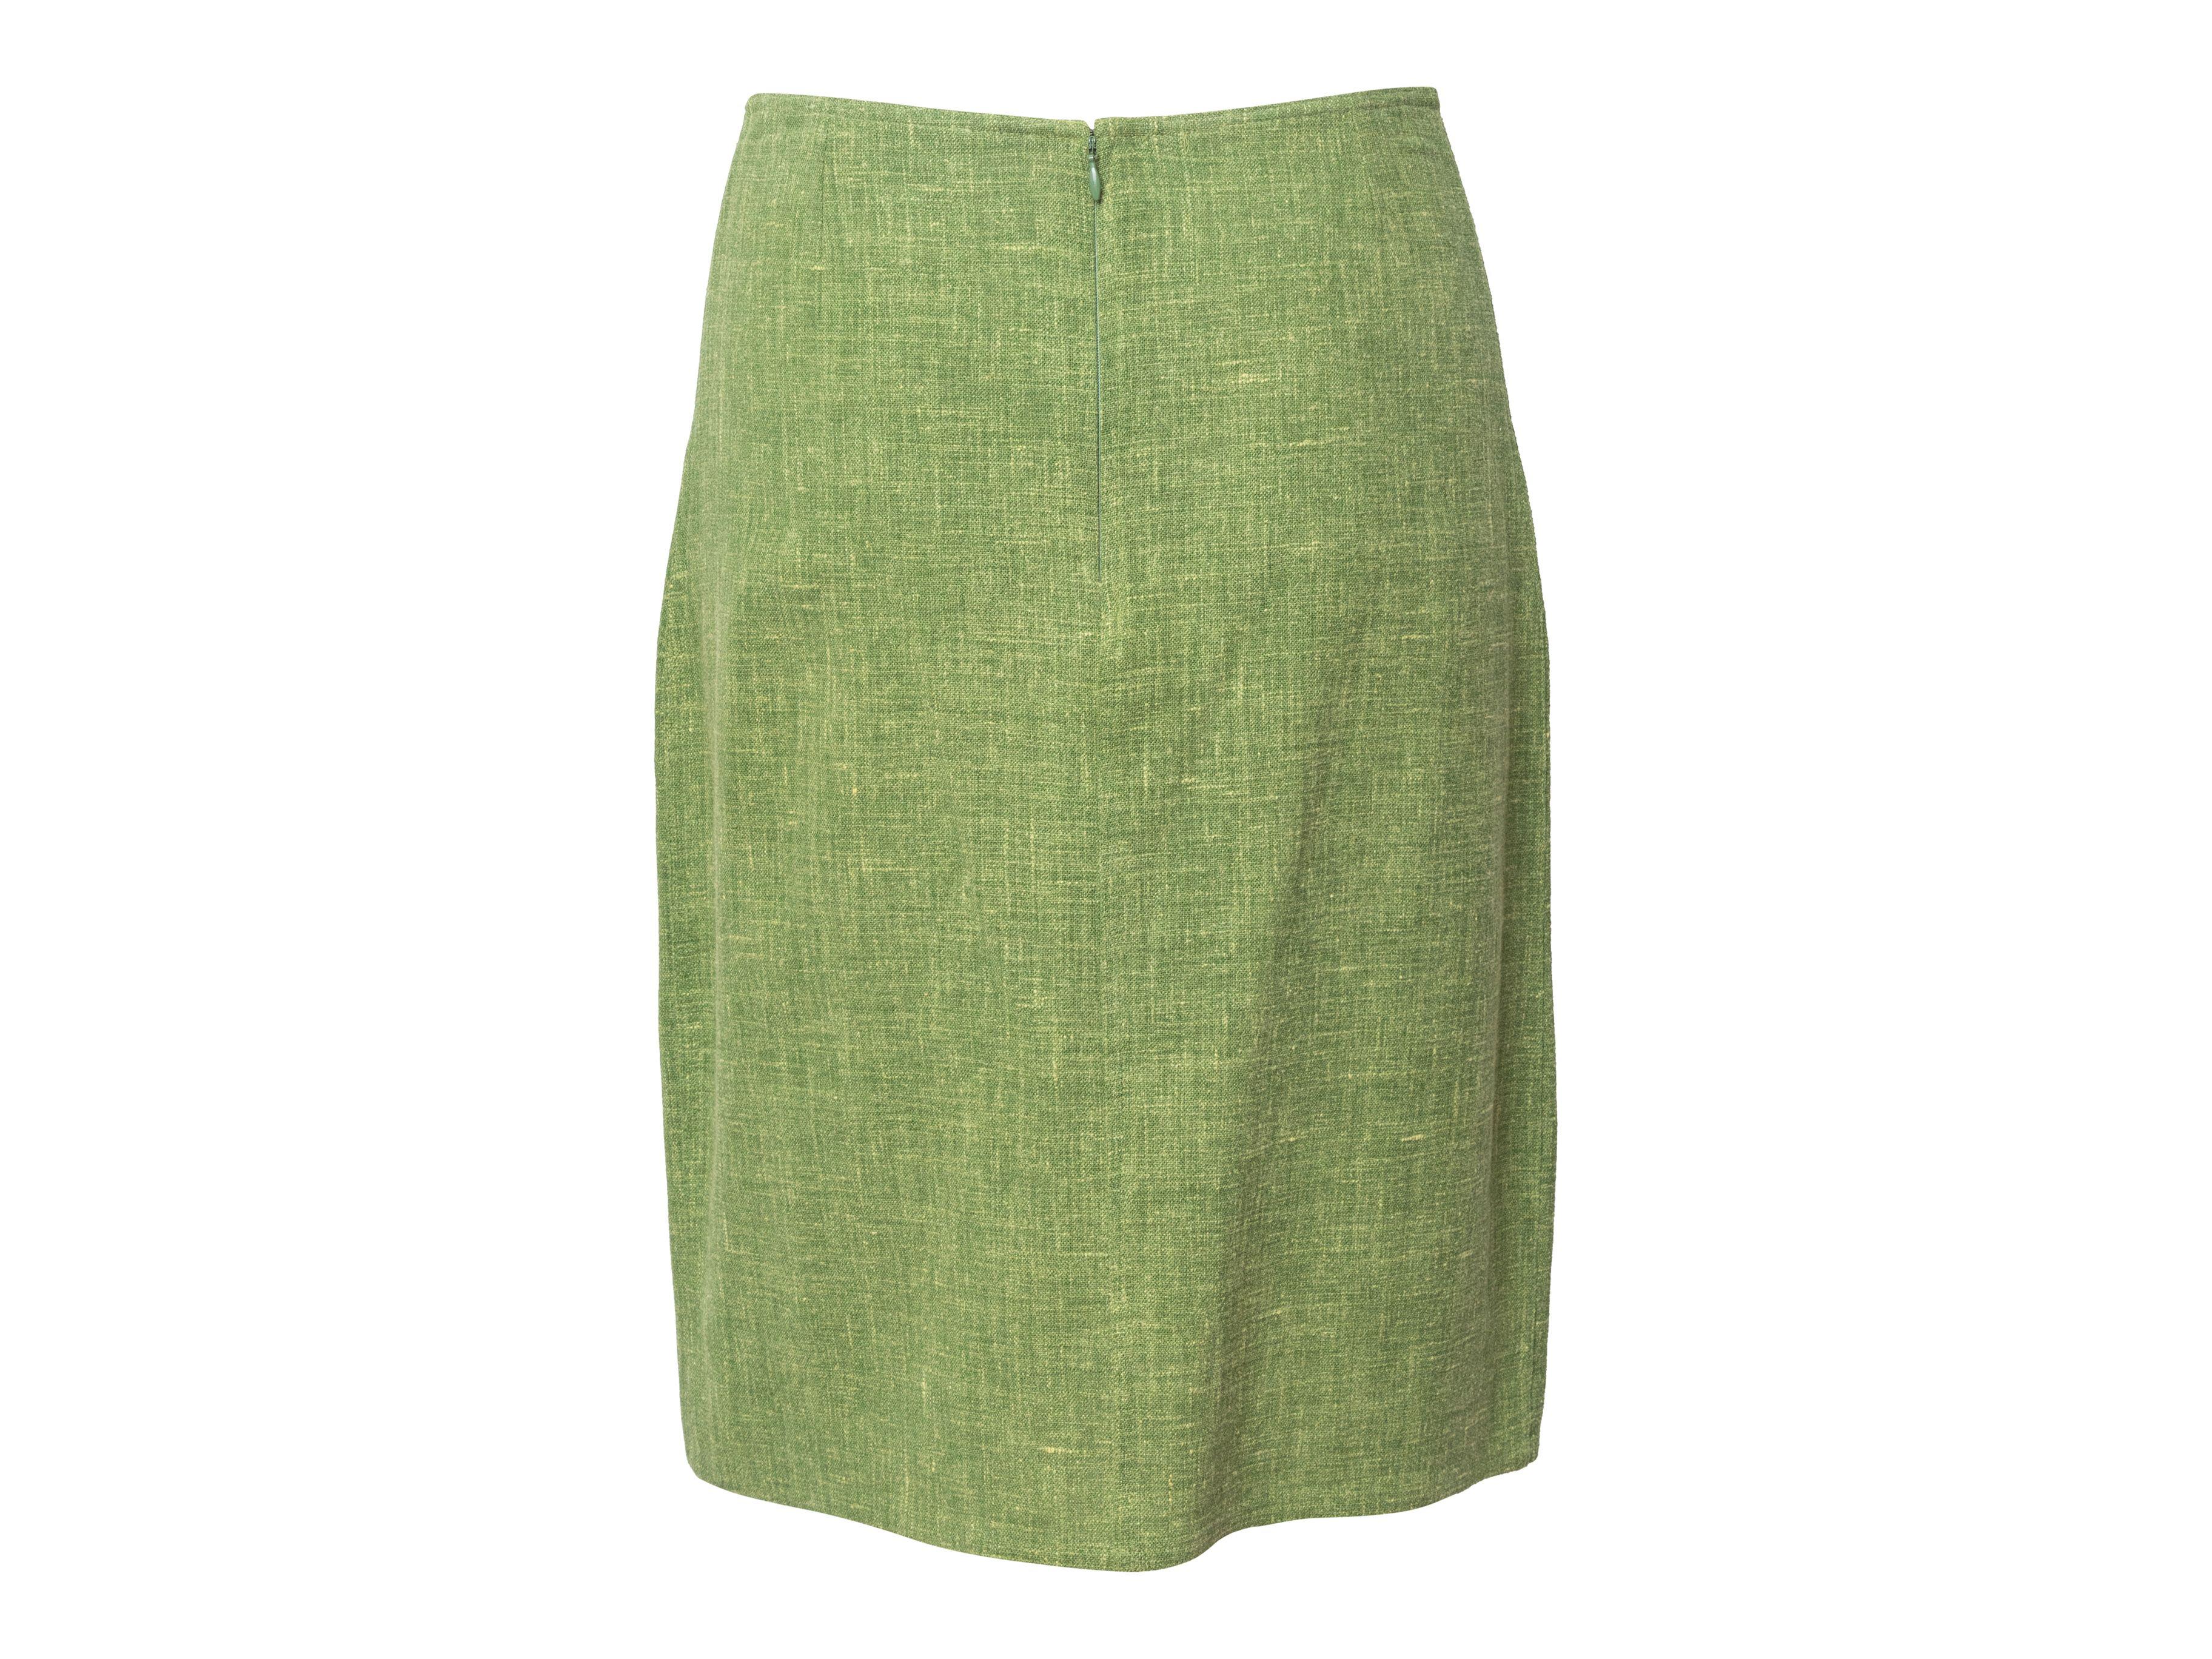 Christian Dior Vintage Green & Tan Linen & Leather Skirt 2